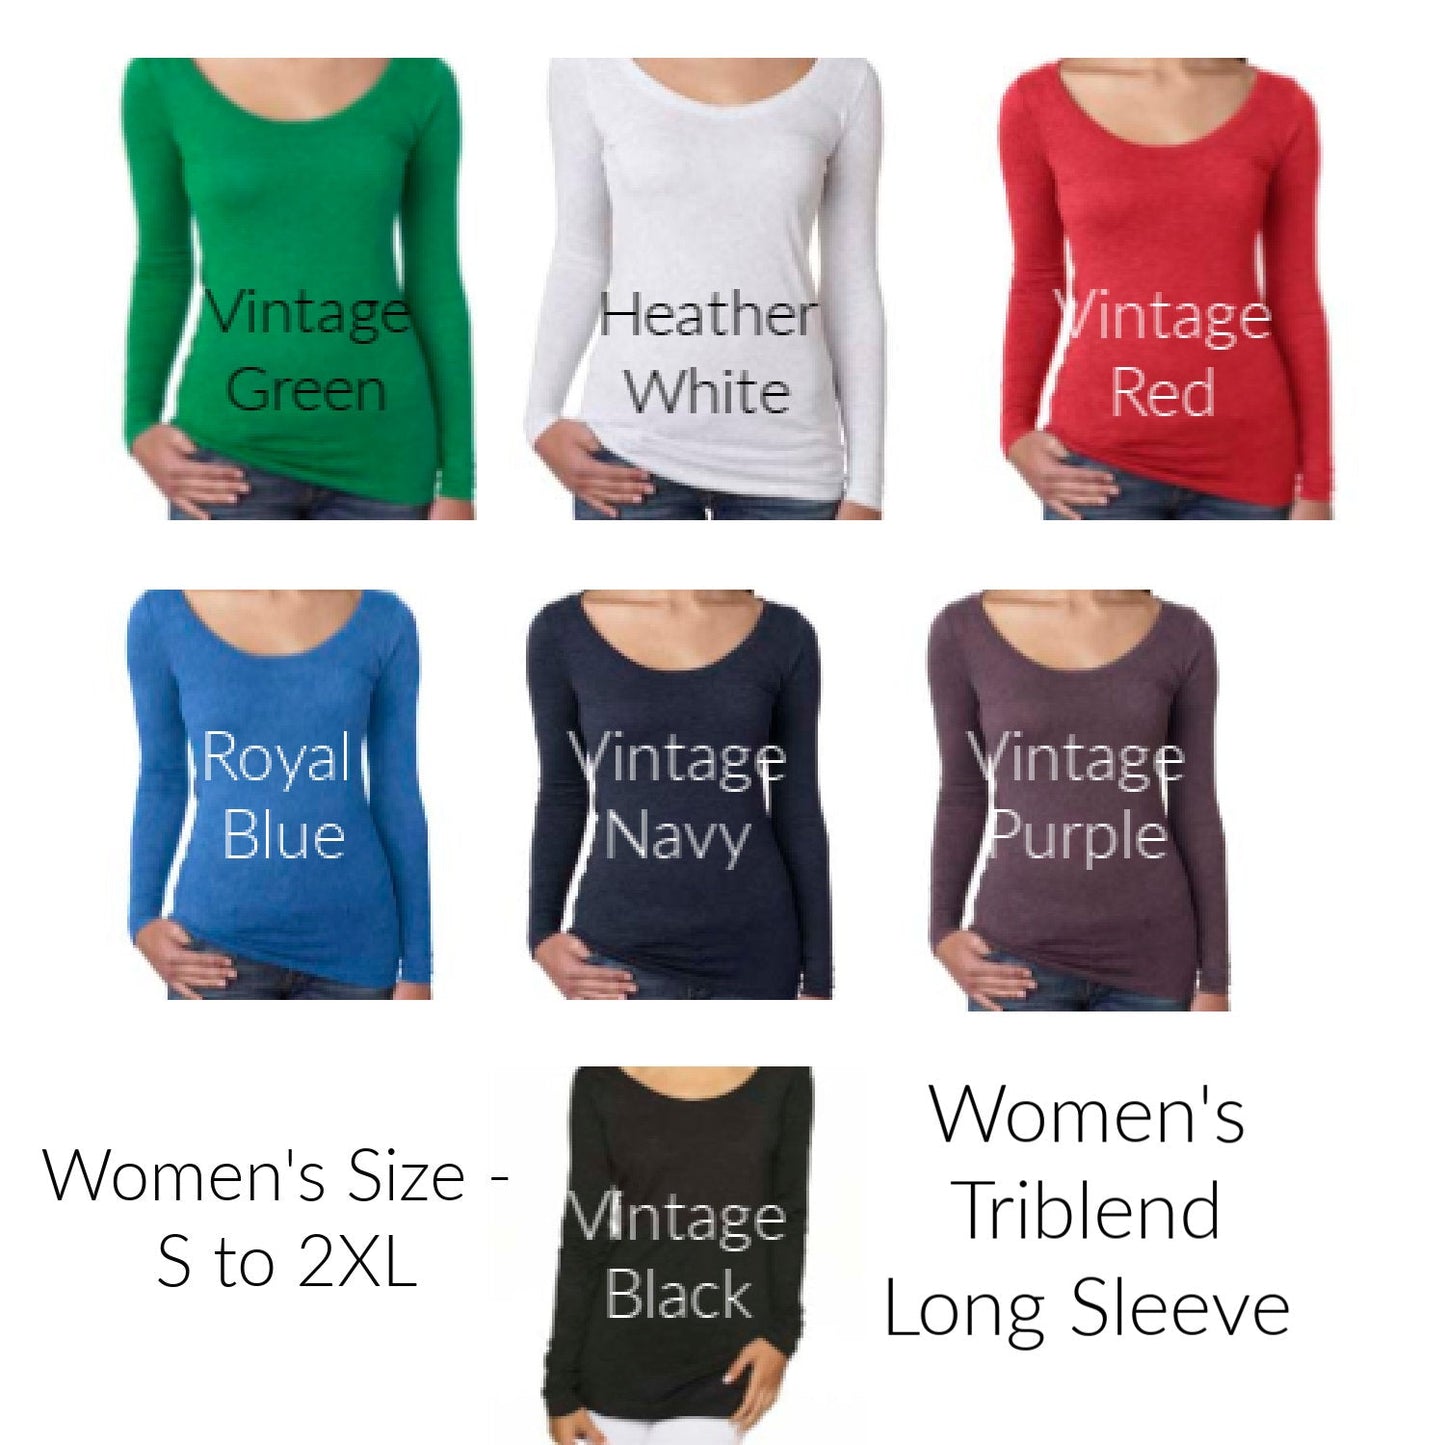 Customize your own T-Shirt - Women's Triblend Long Sleeve Tee